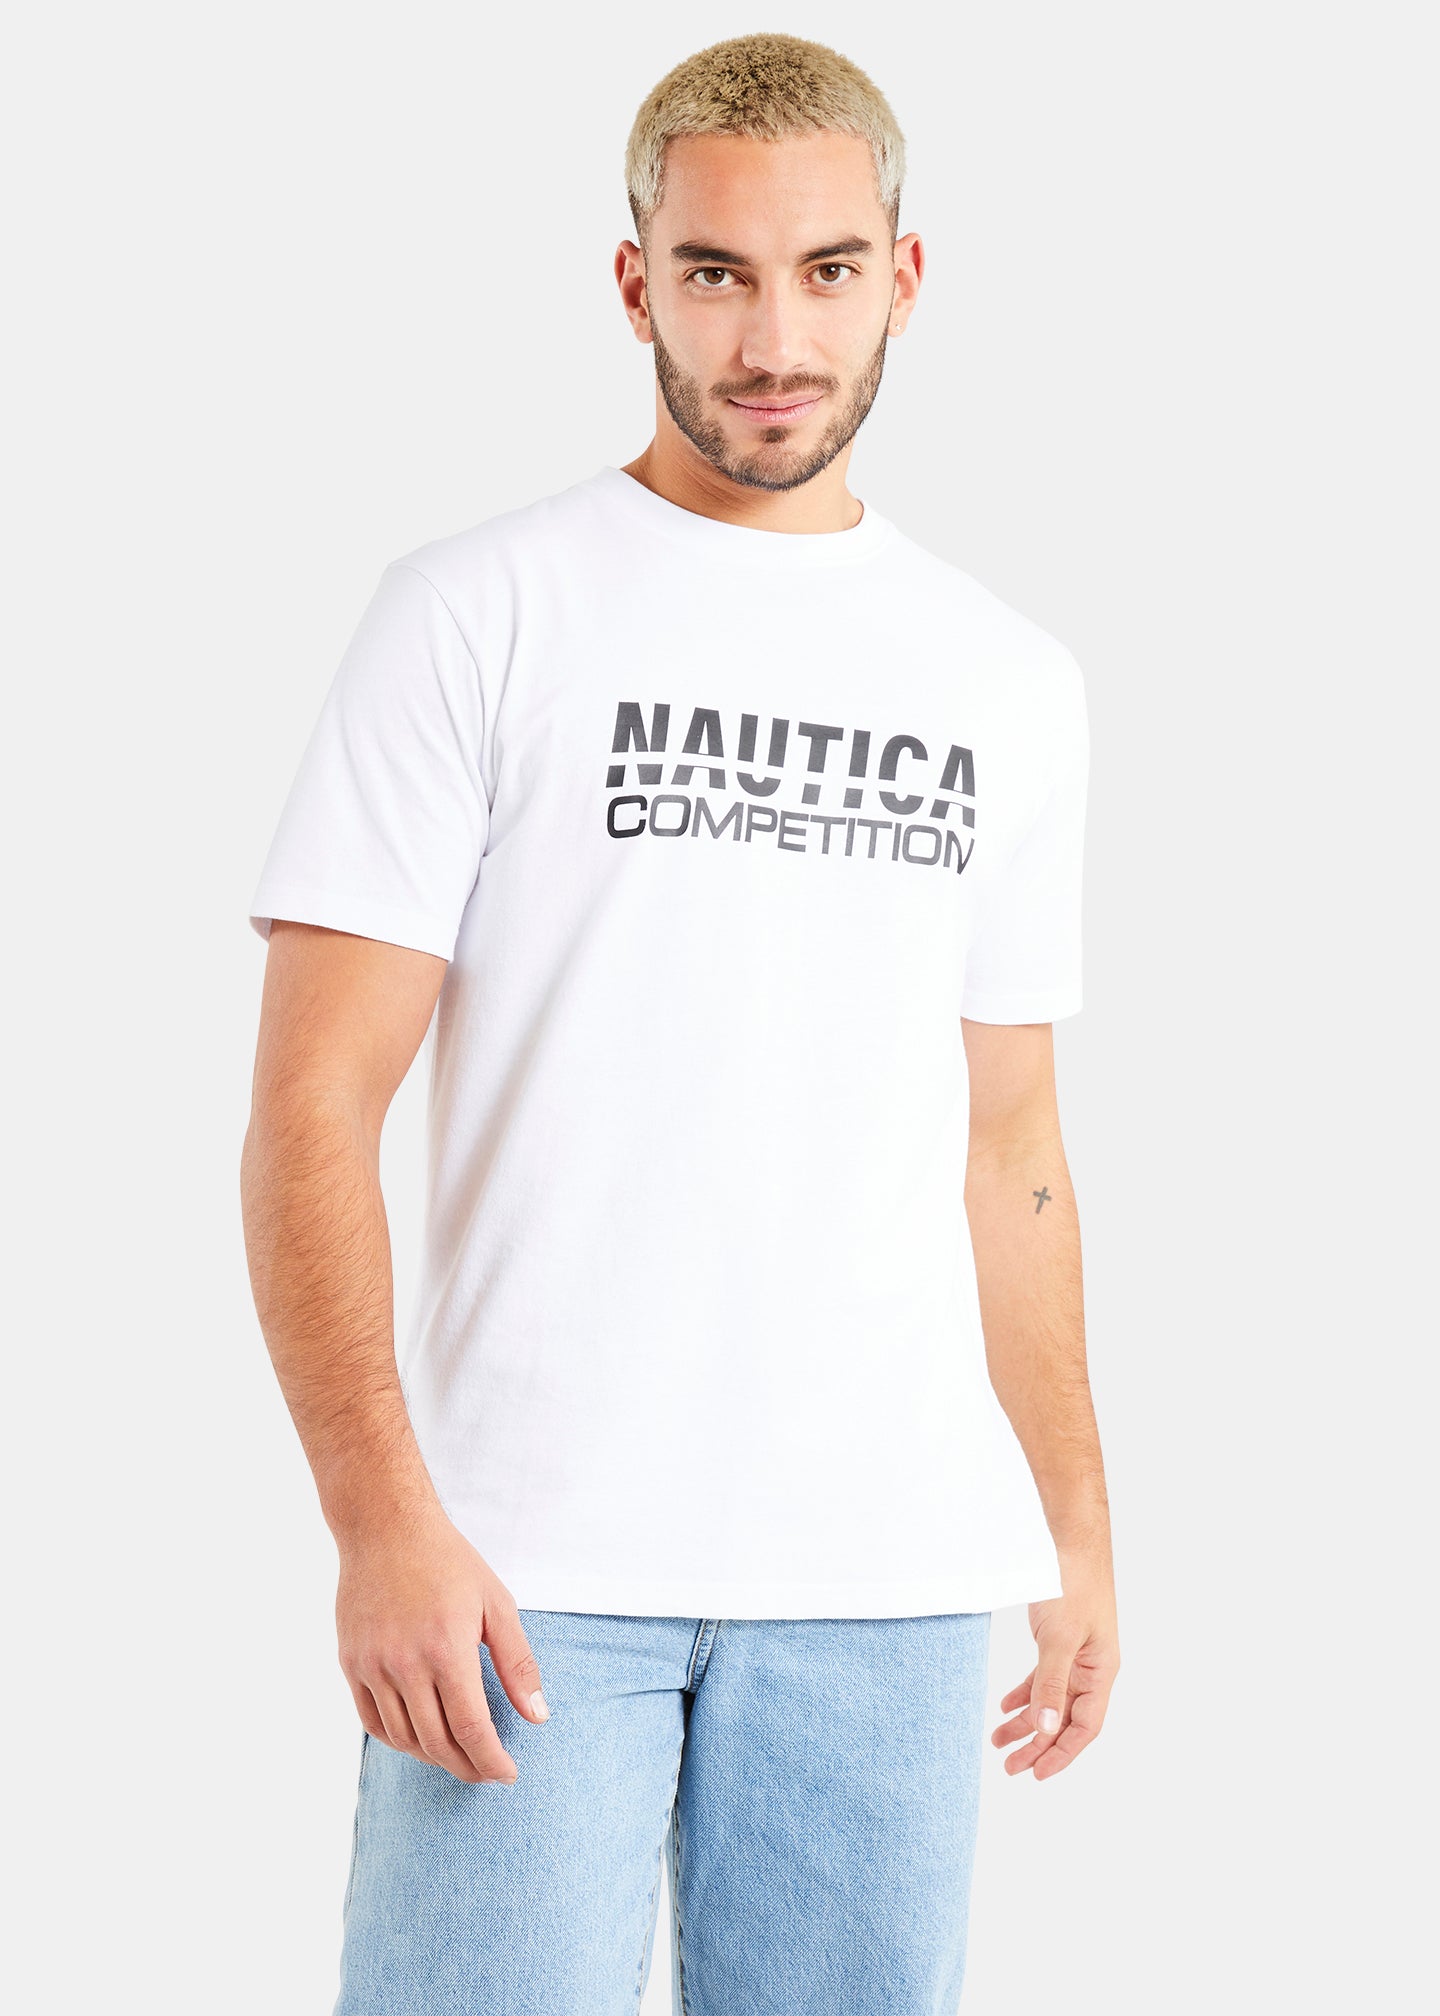 Nautica Competition - White - Front